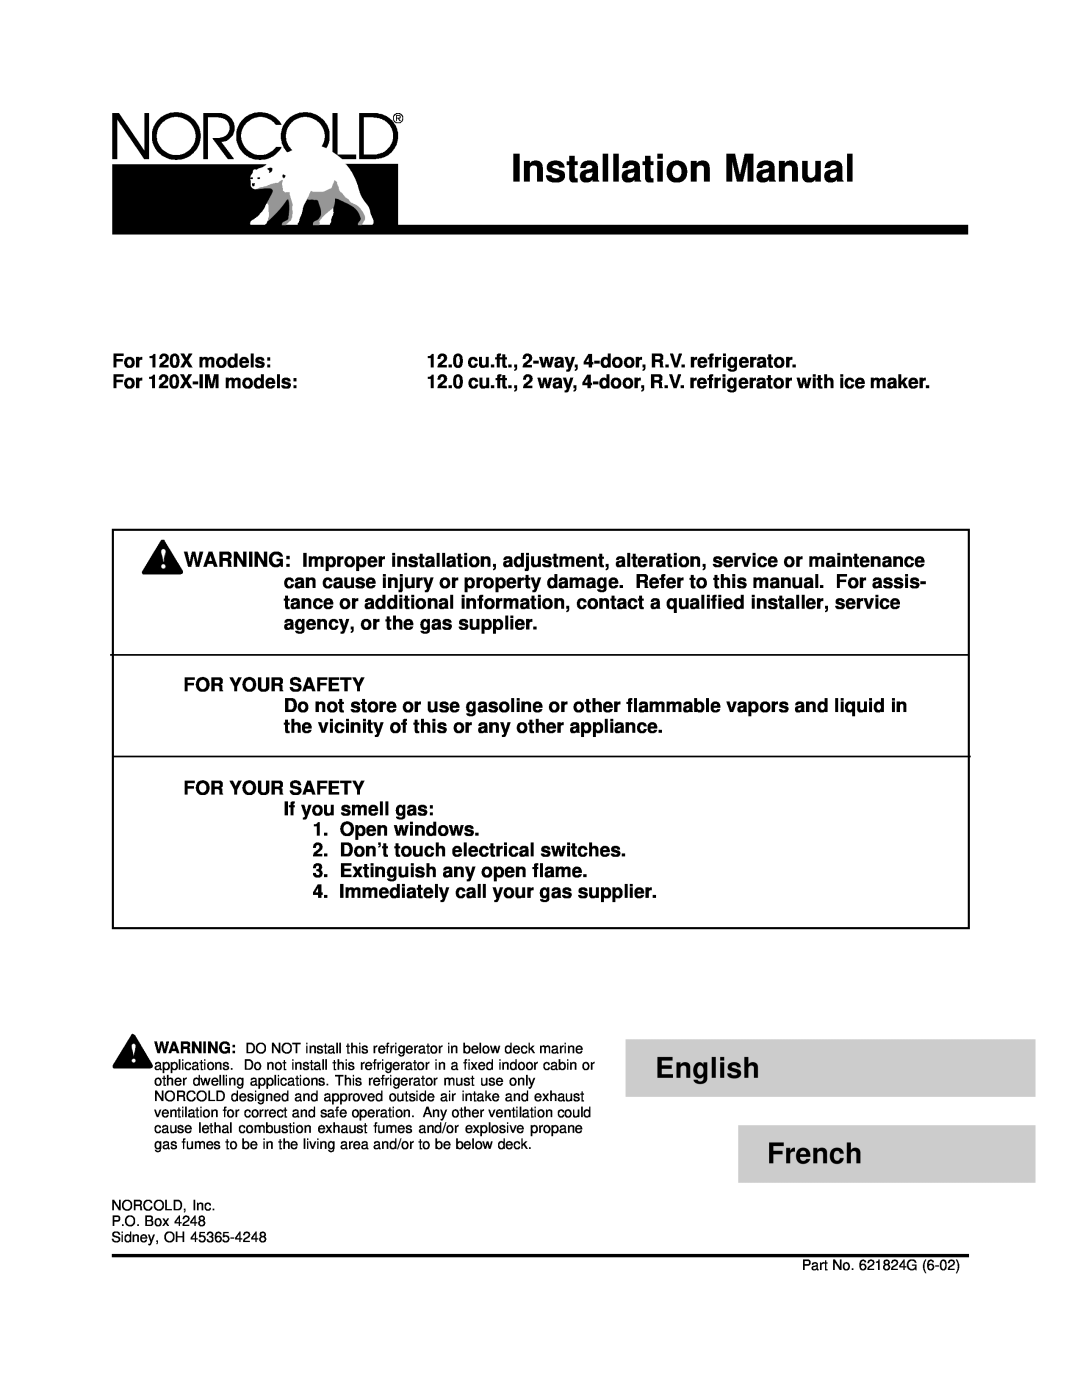 Norcold 120x installation manual Installation Manual, English, French 